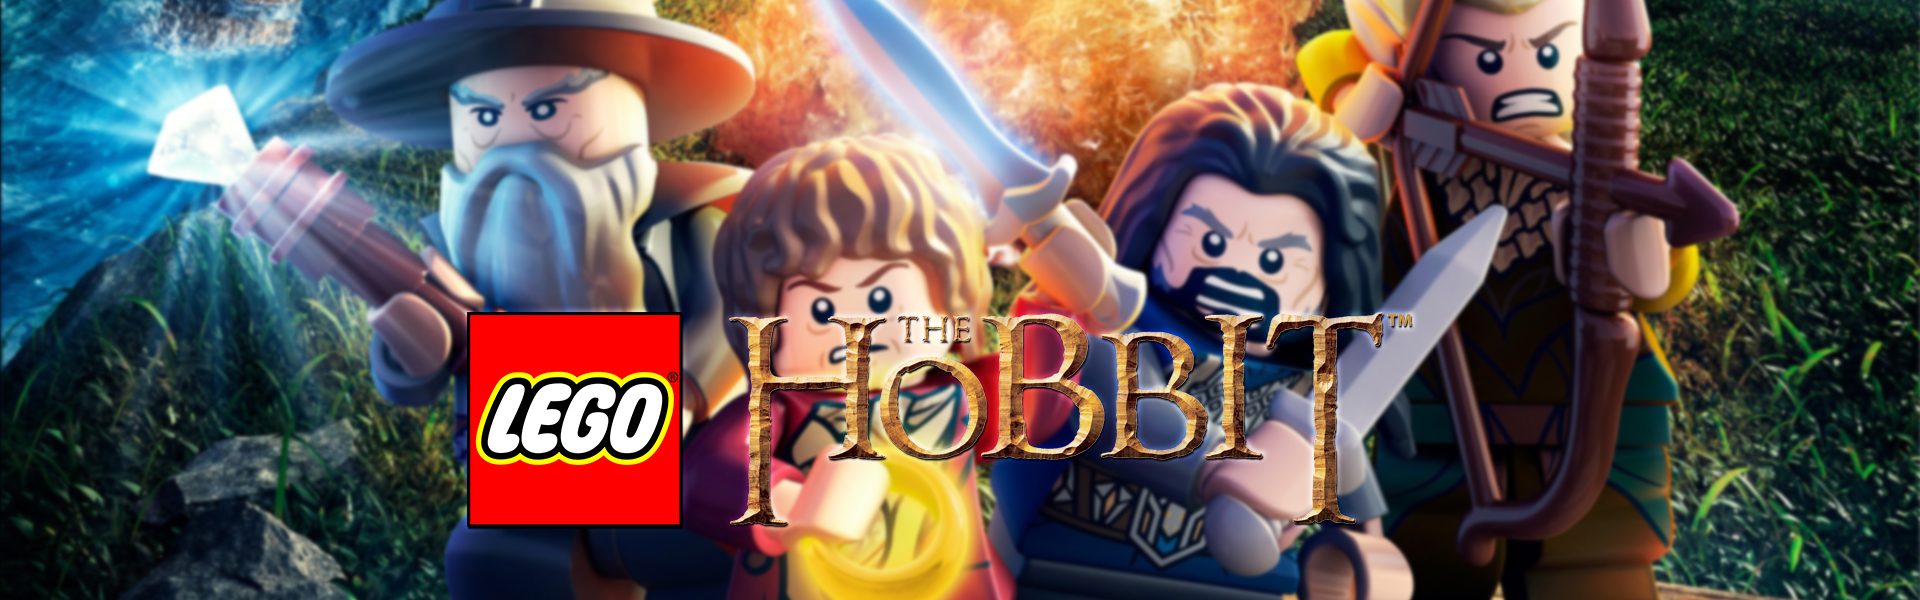 https://robwestwood.com/wp-content/uploads/2013/01/Hobbit-Banner.jpg